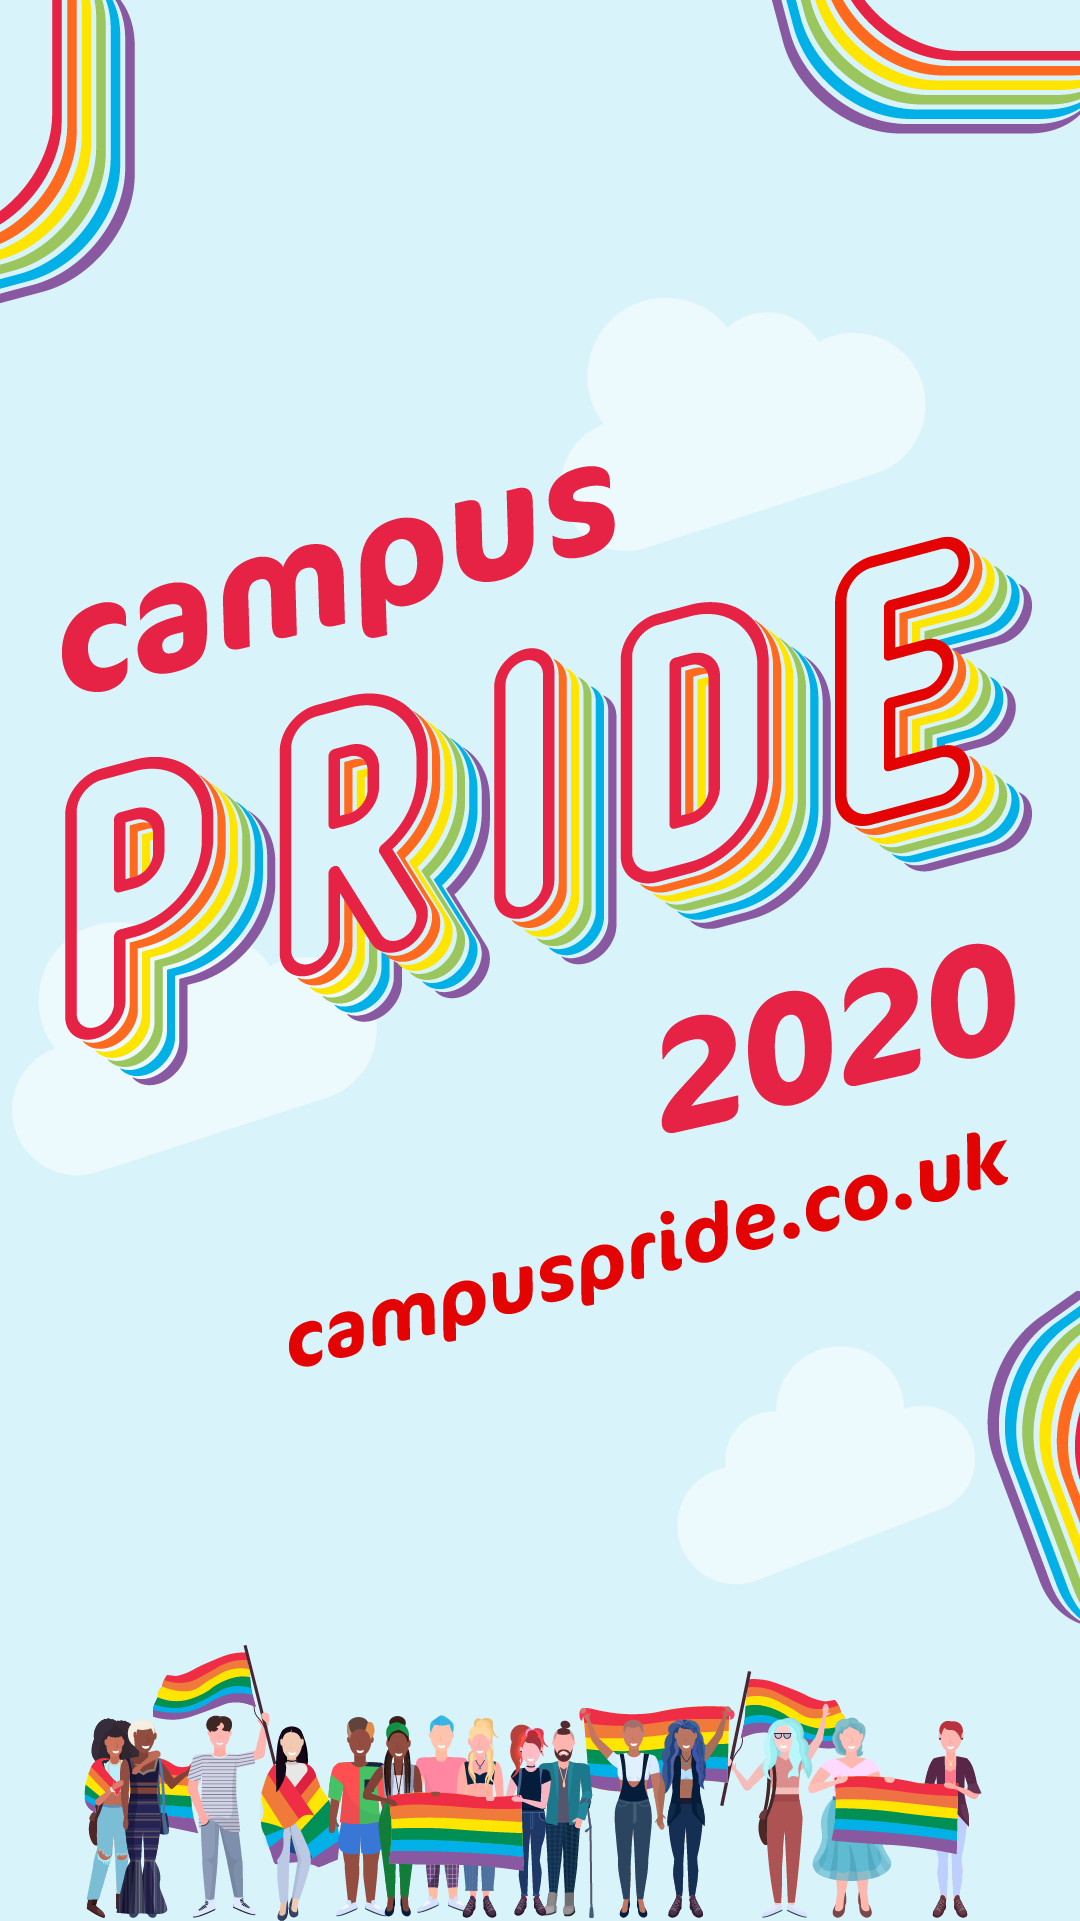 Campus Pride 2020